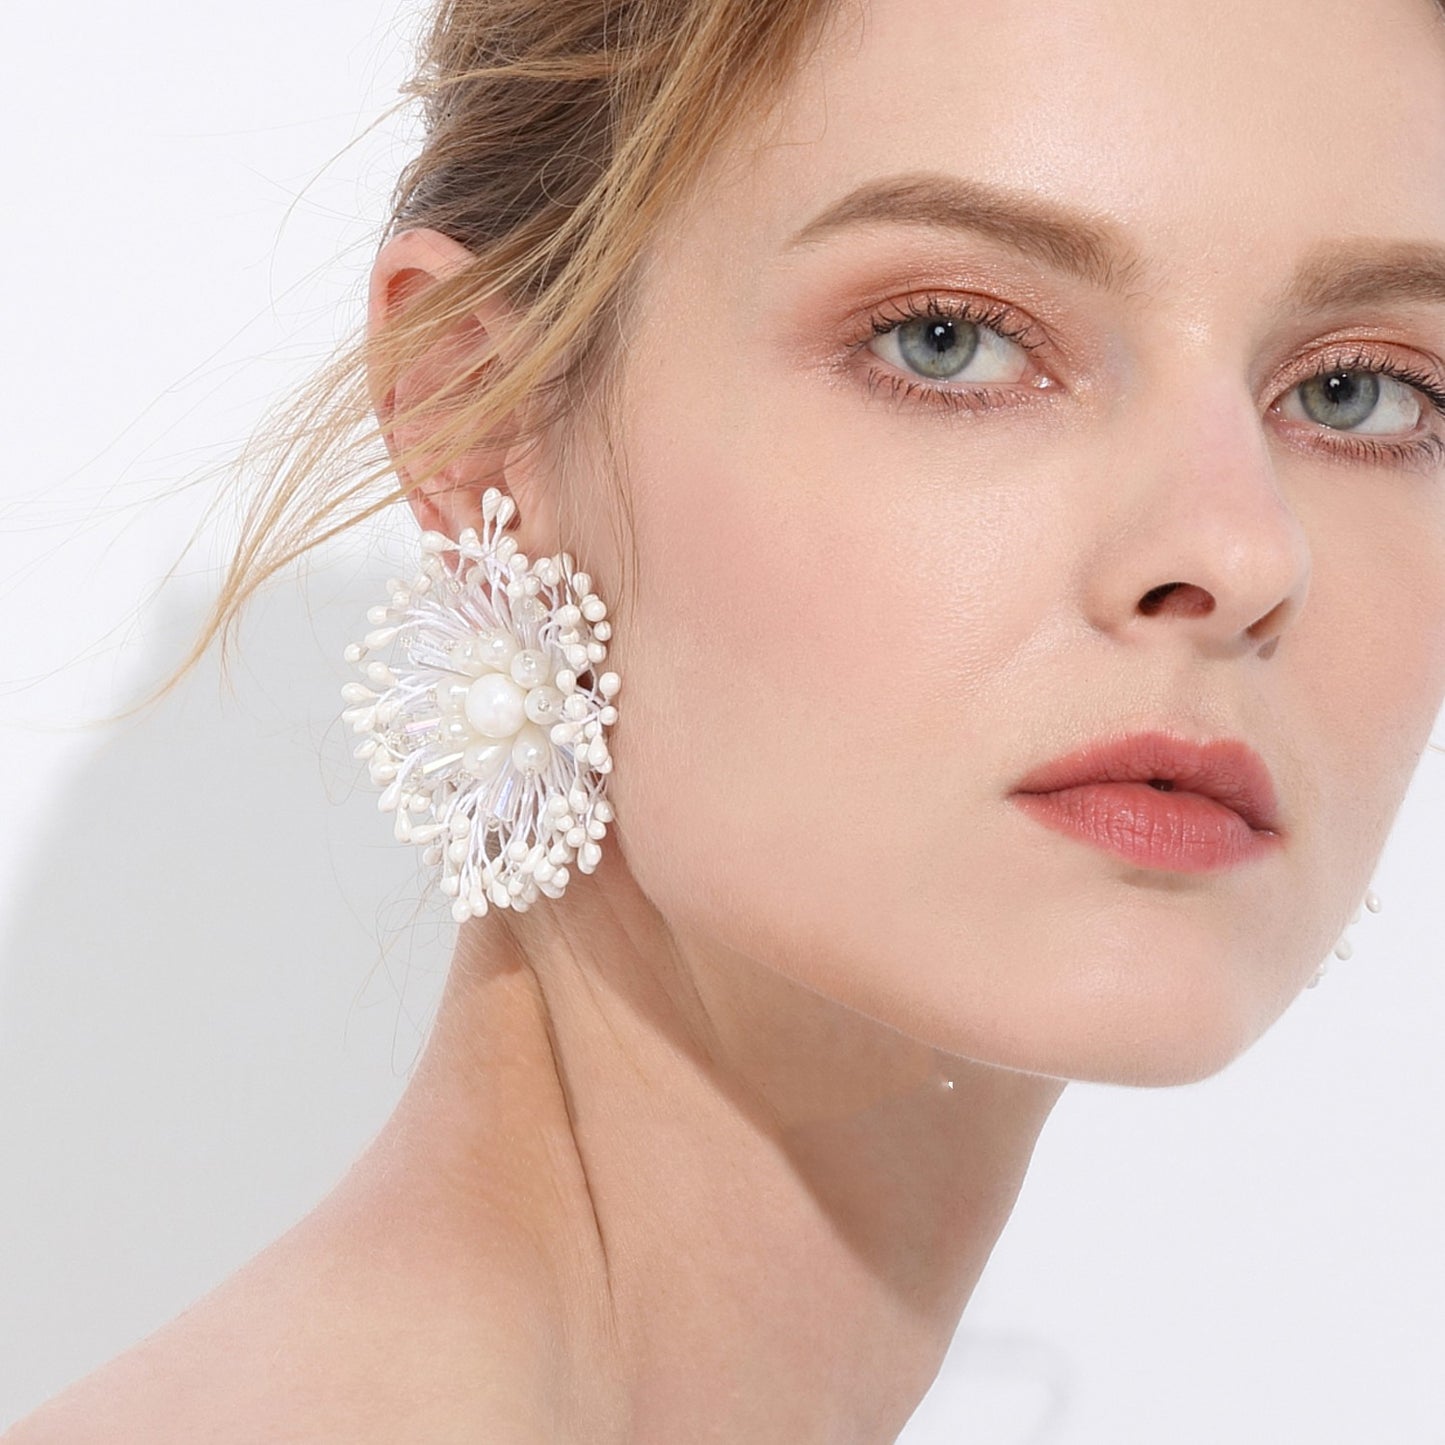 Women Retro Earrings Exaggerated White Flowers